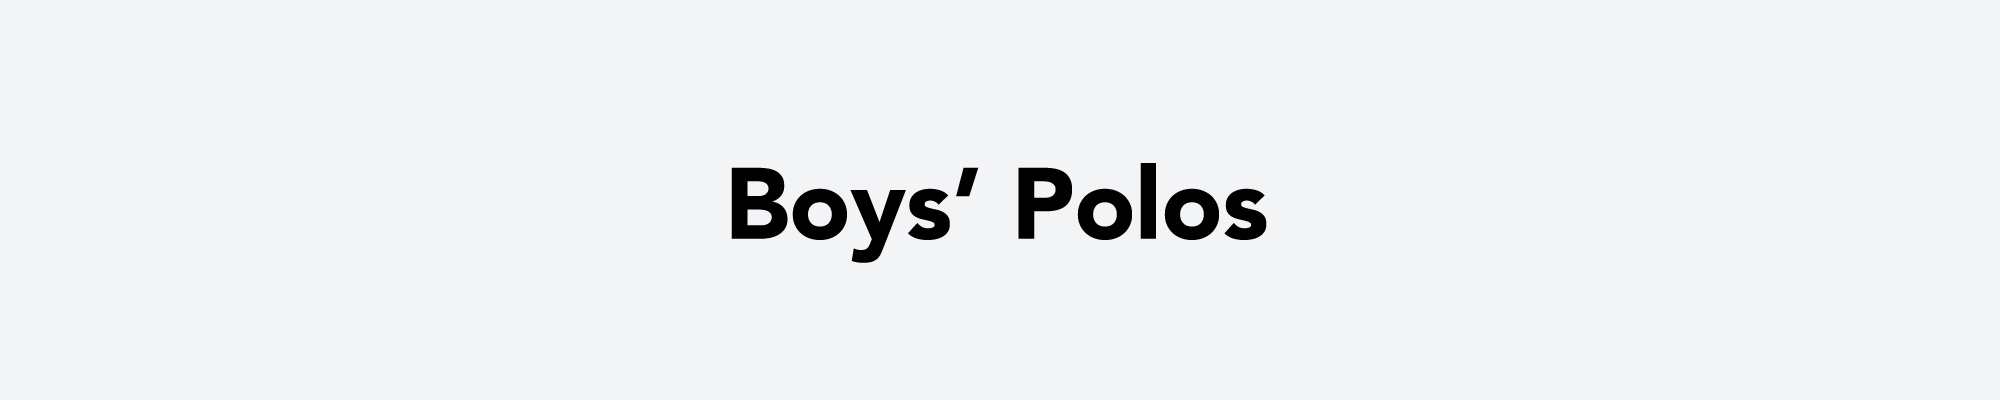 Boys' Polos